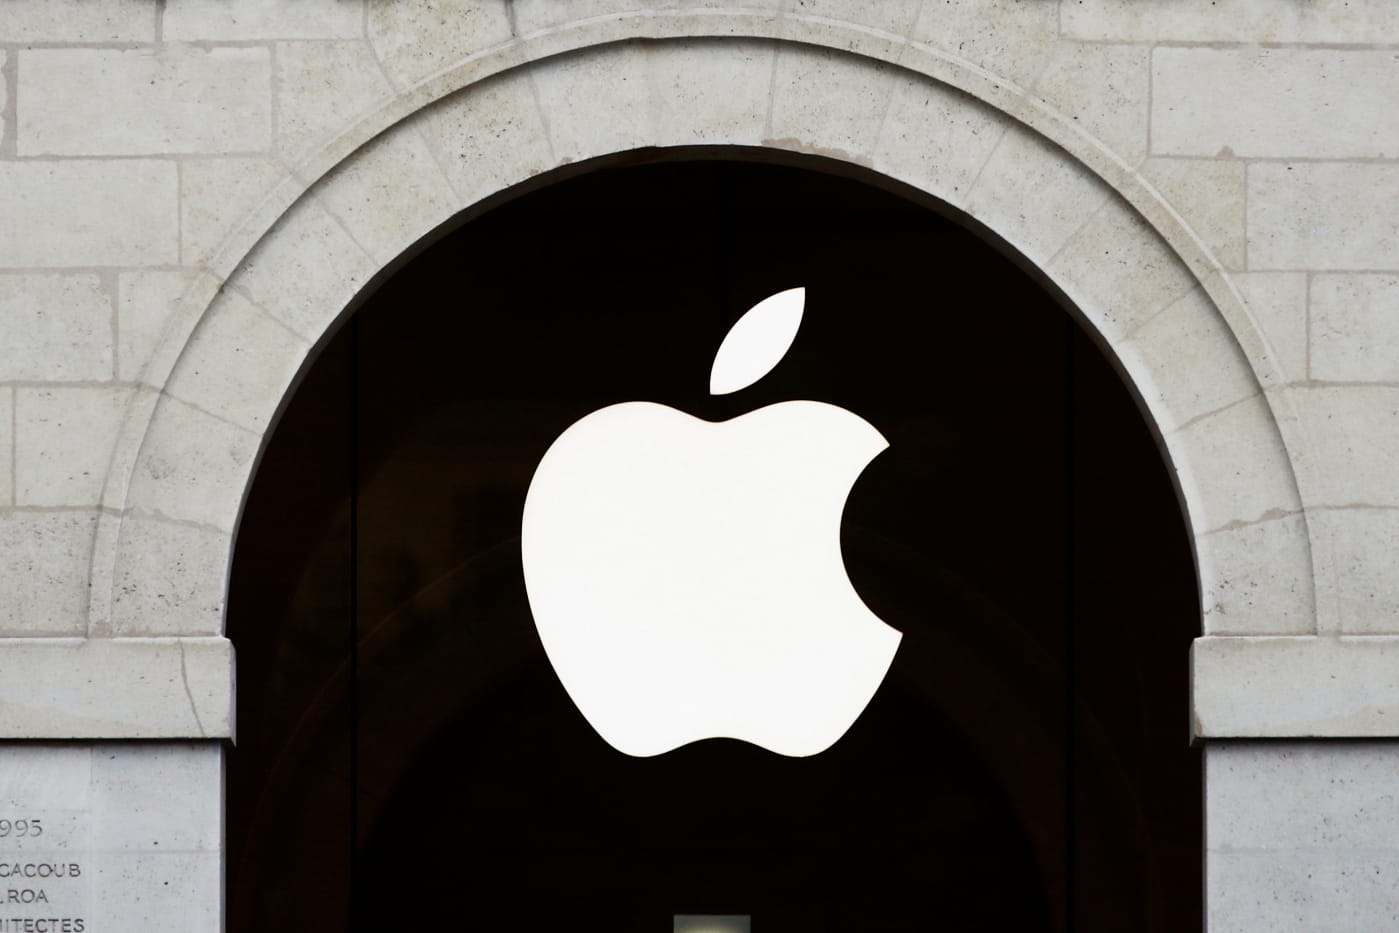 Apple is battling a $2 billion EU fine over App Store practices